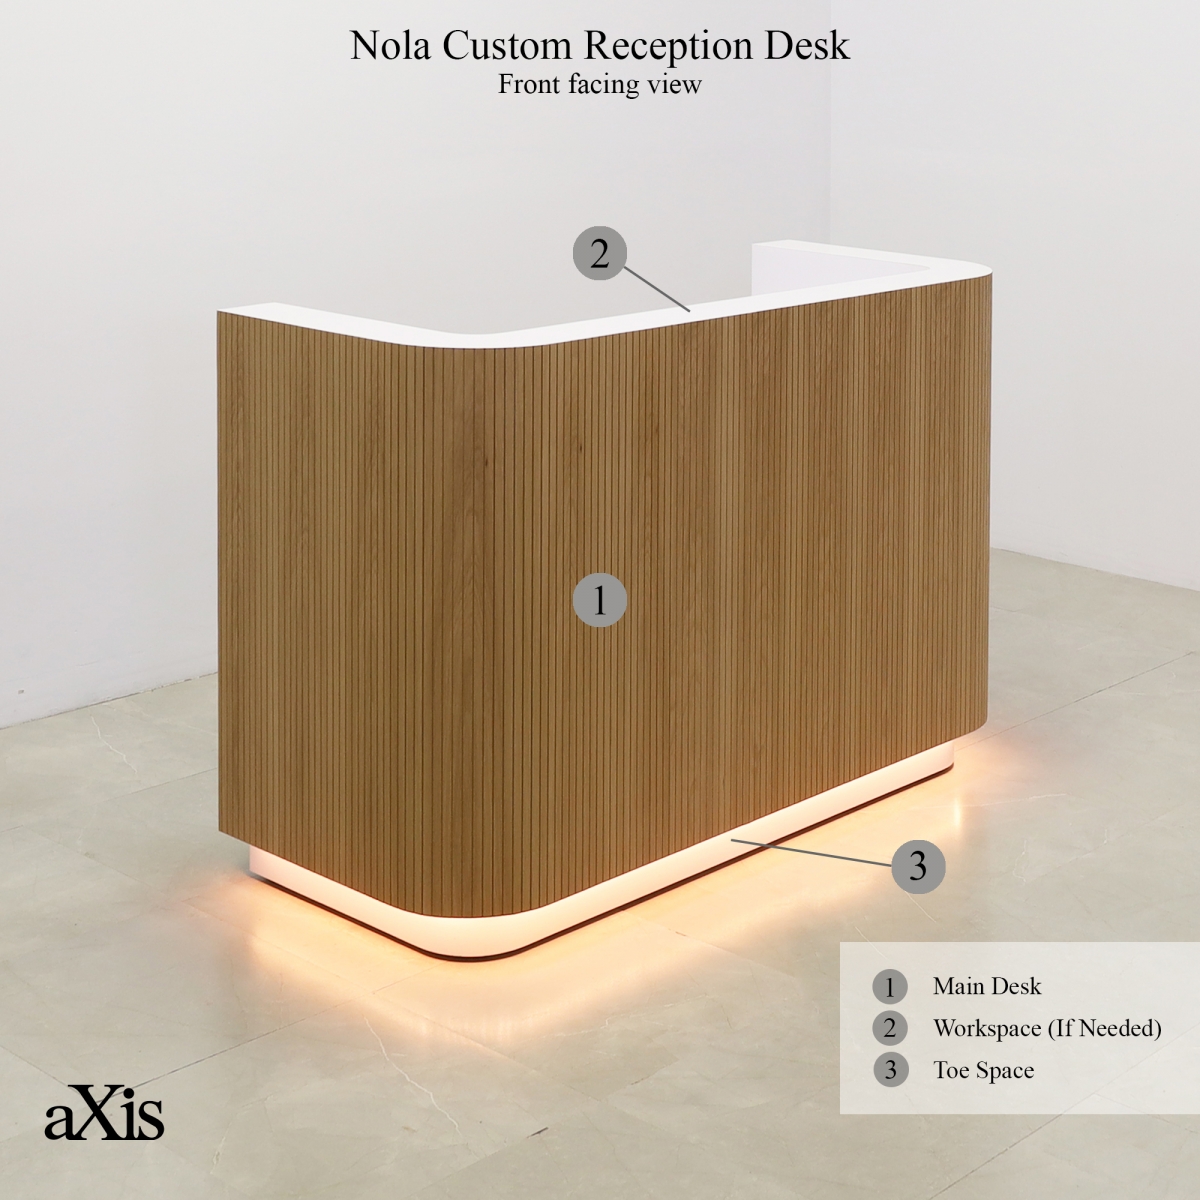 Nola Custom Reception Desk